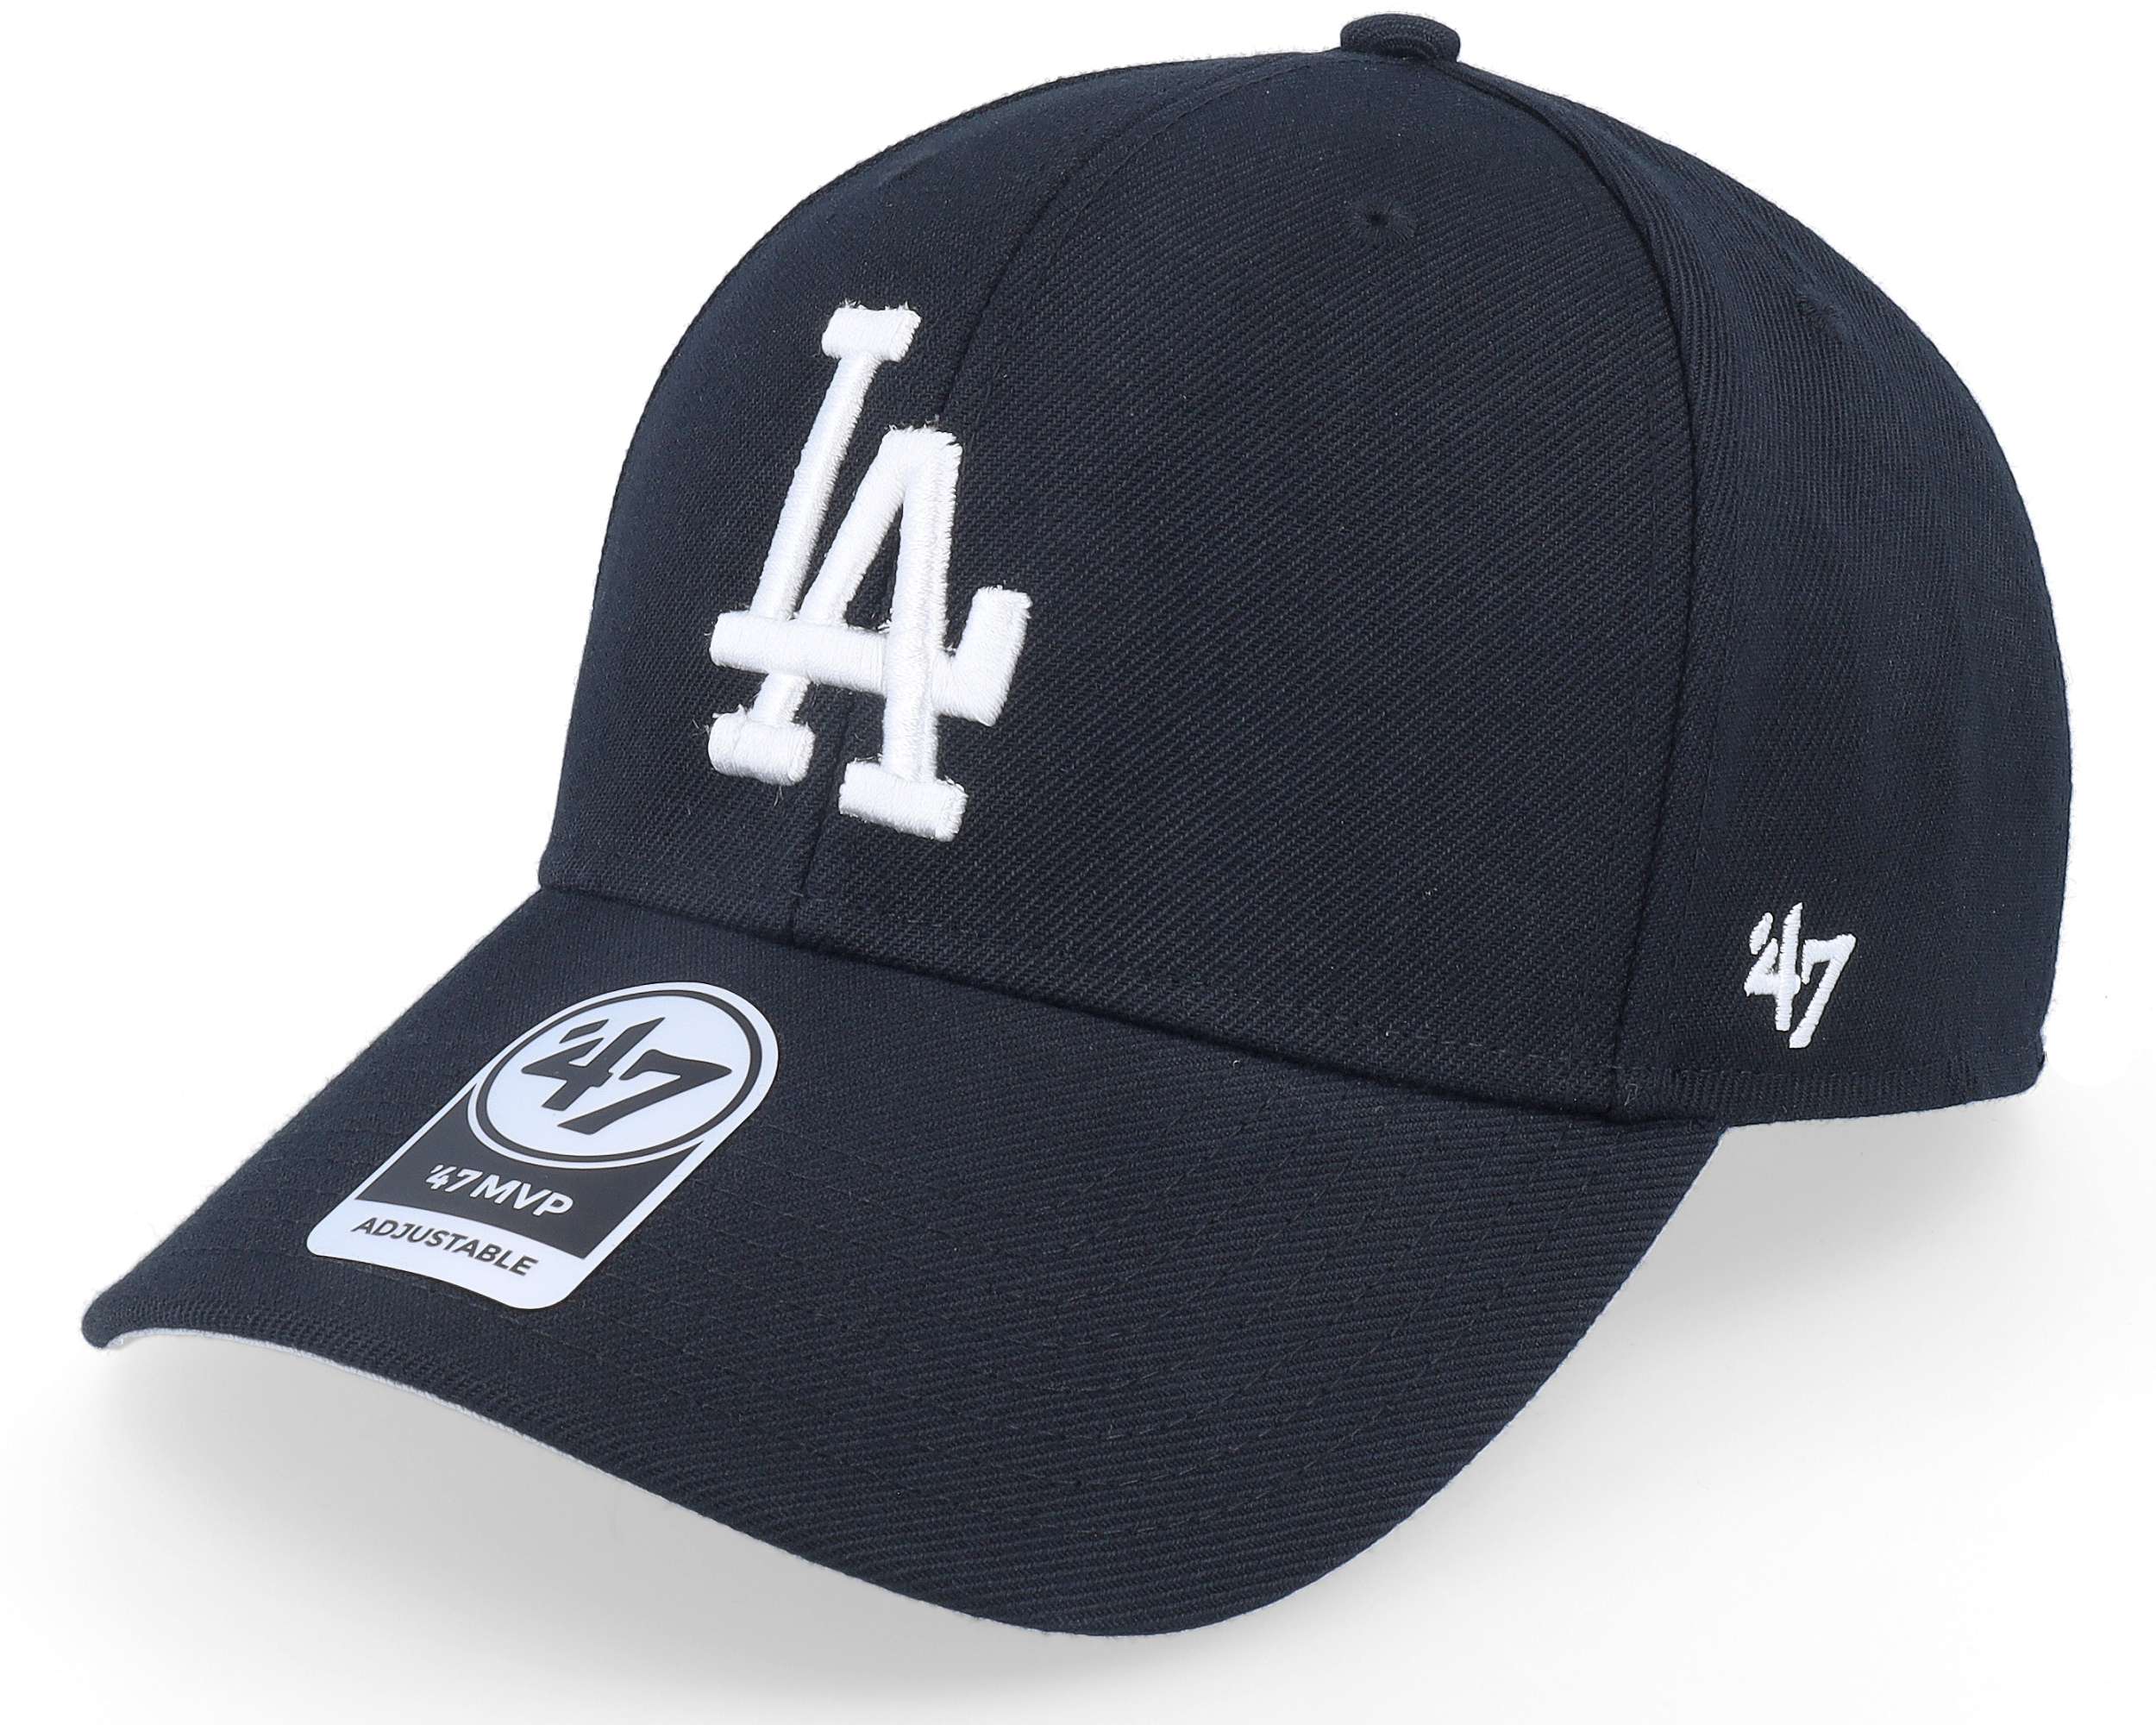 Gorra 47 Los Angeles Dodgers